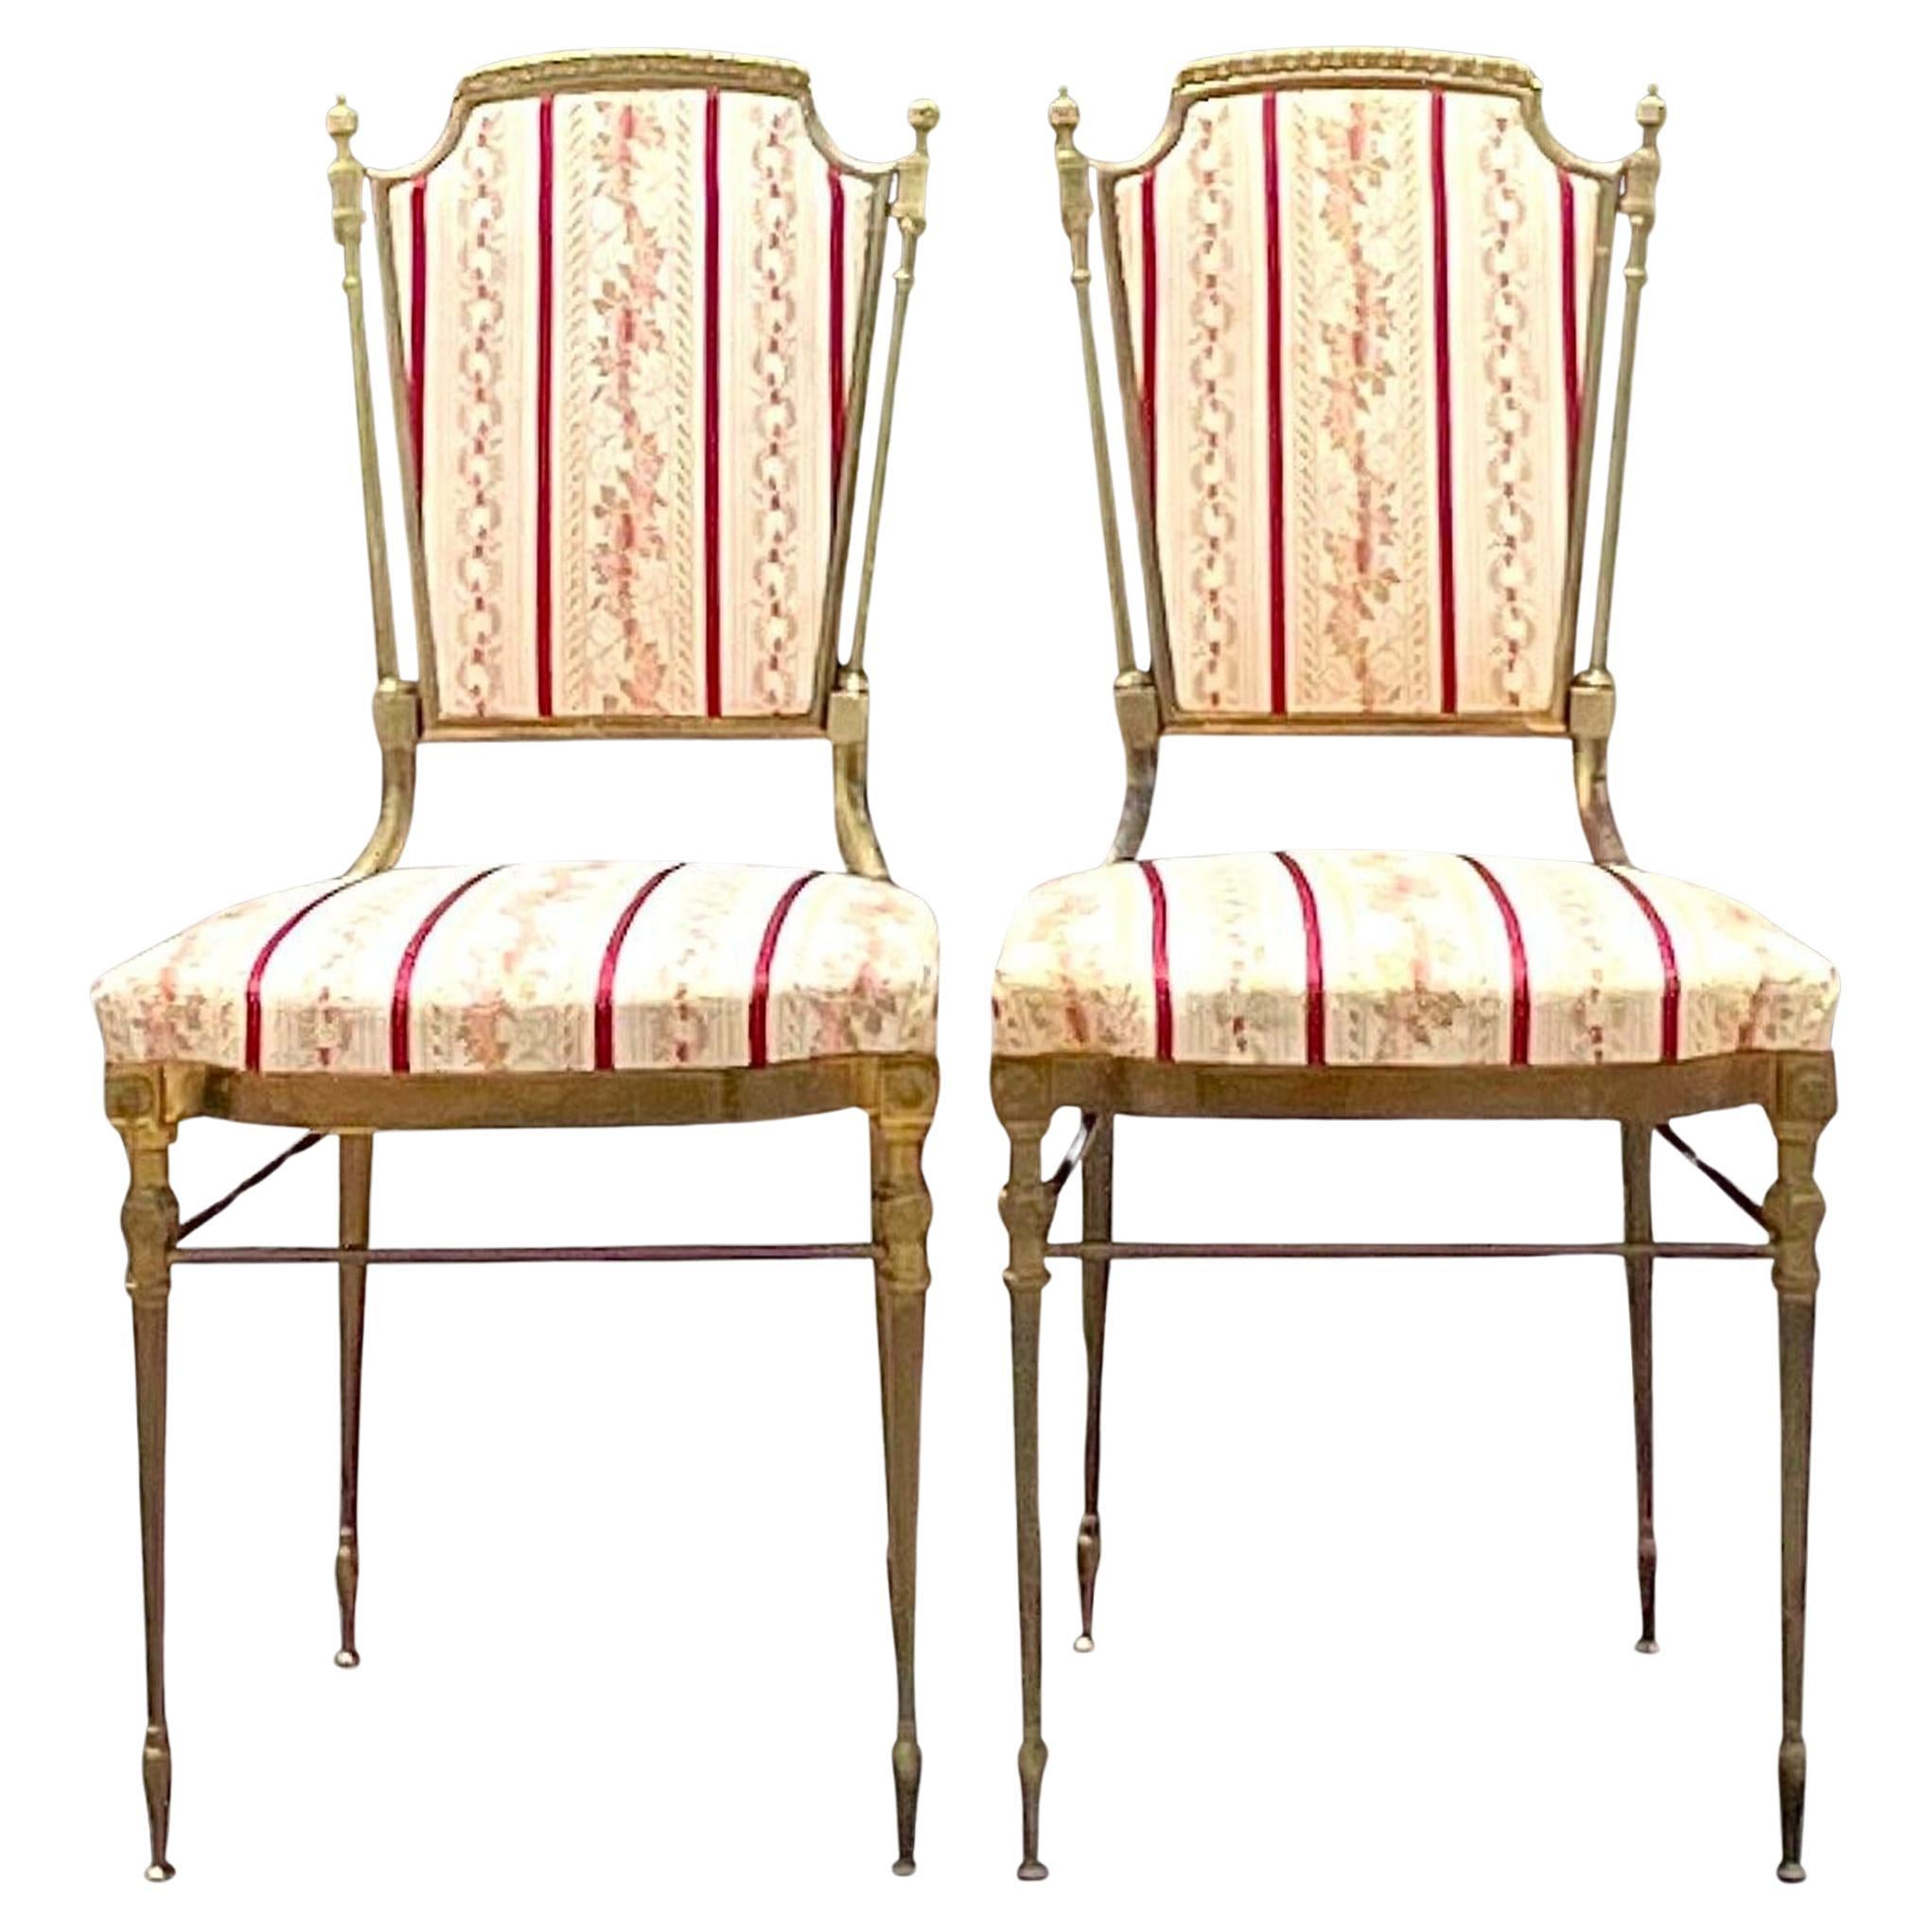 Vintage Italian Brass Charvari Chairs - a Pair